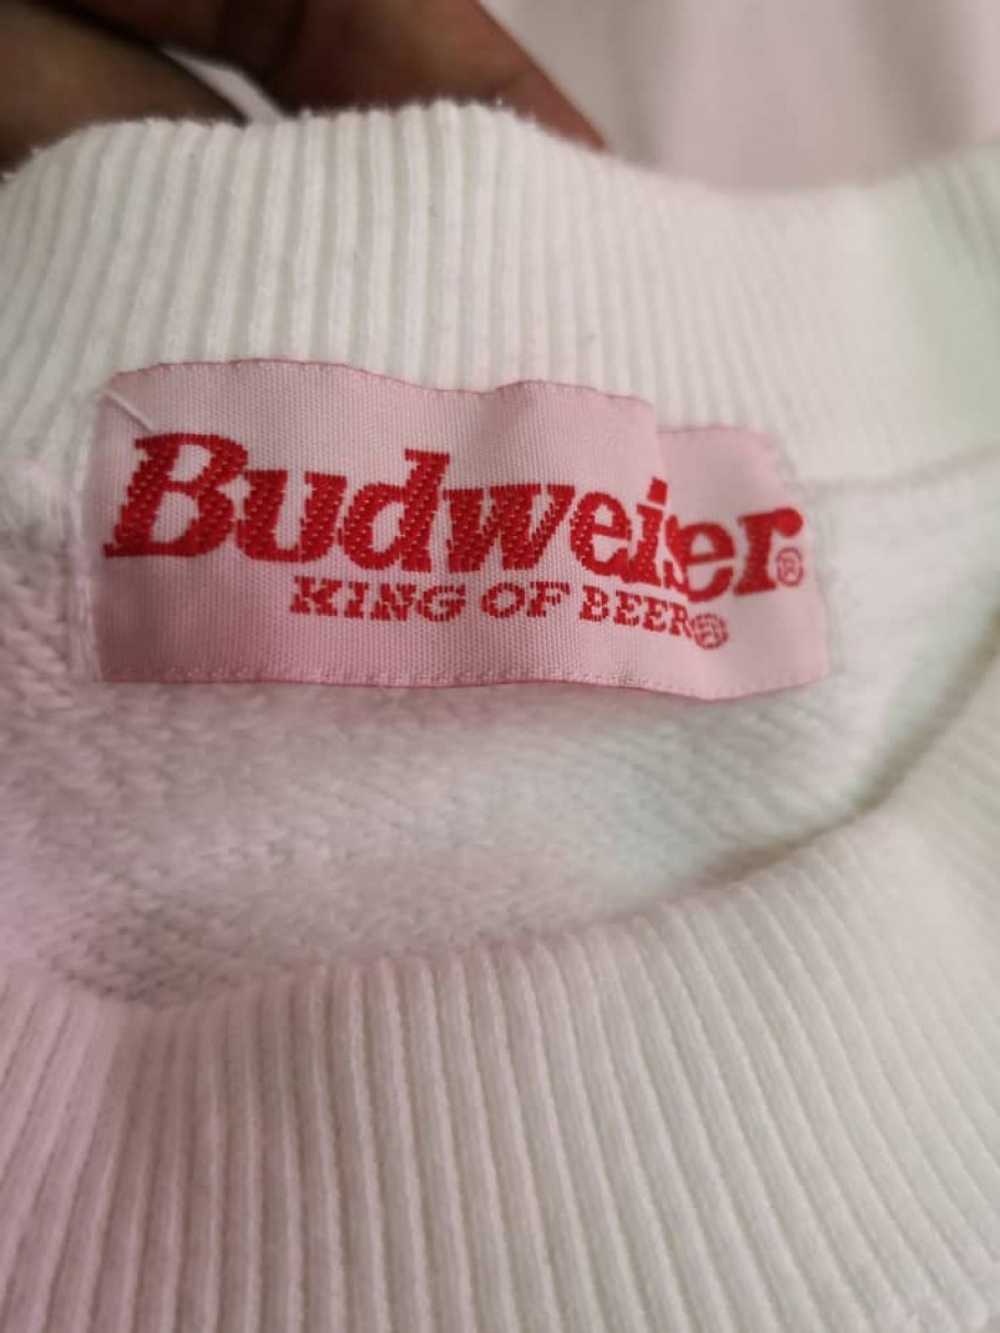 Budweiser - DELETE TODAY x budweiser jumper - image 7